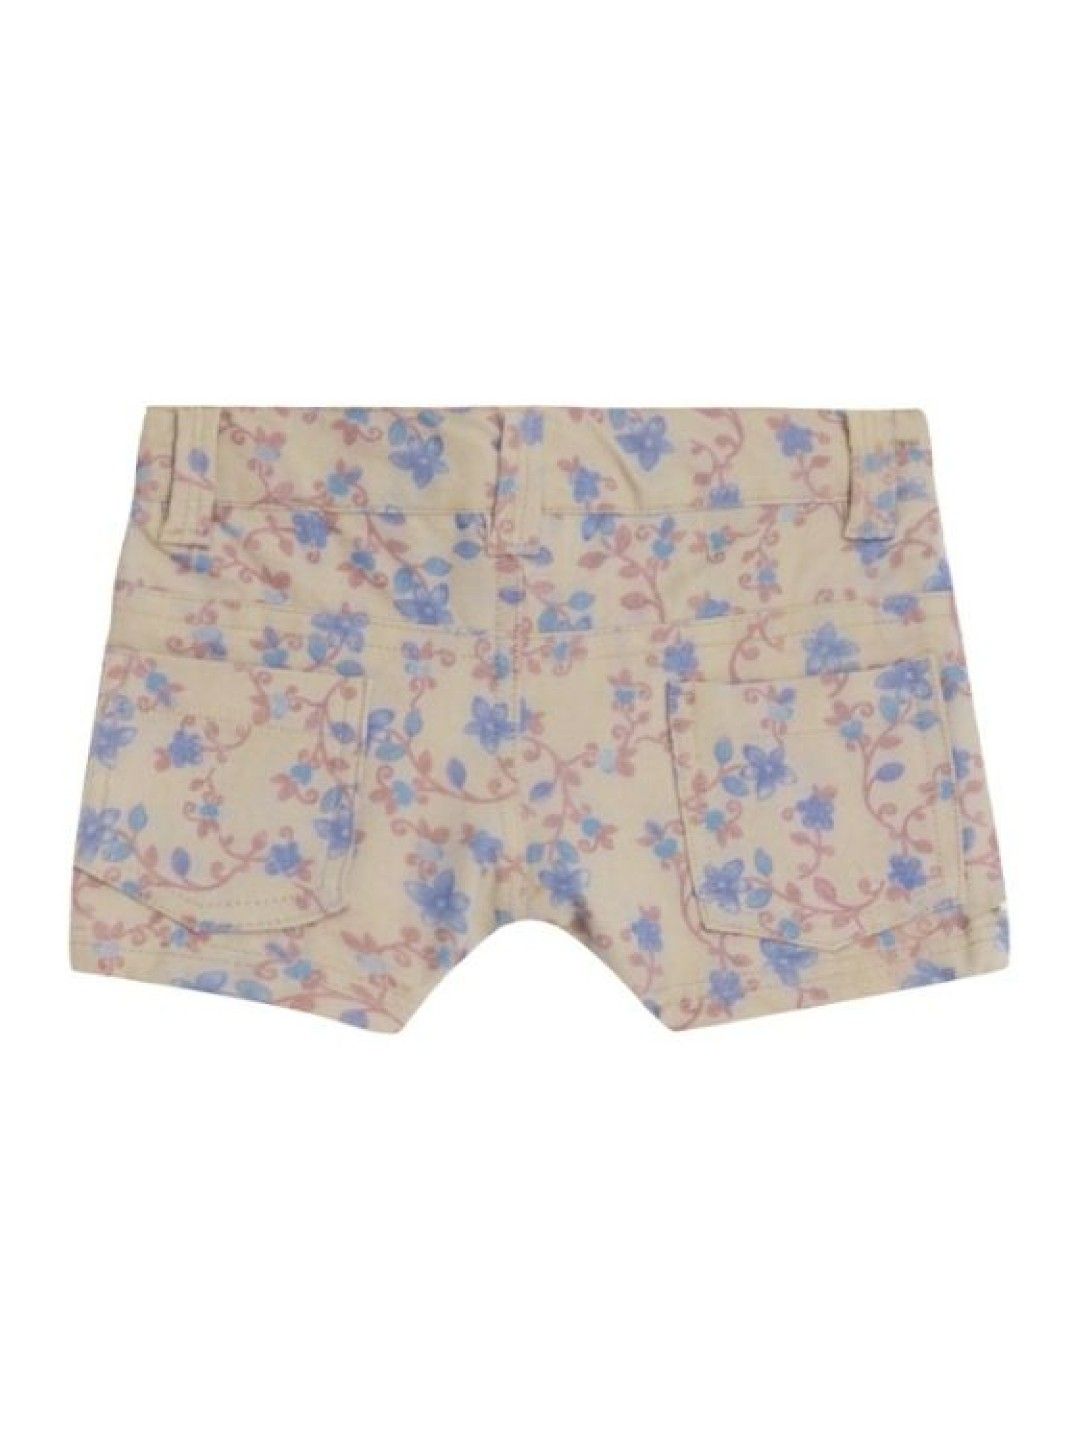 Petit l' ange Children's Wear Flower Printed Shorts (Beige- Image 2)